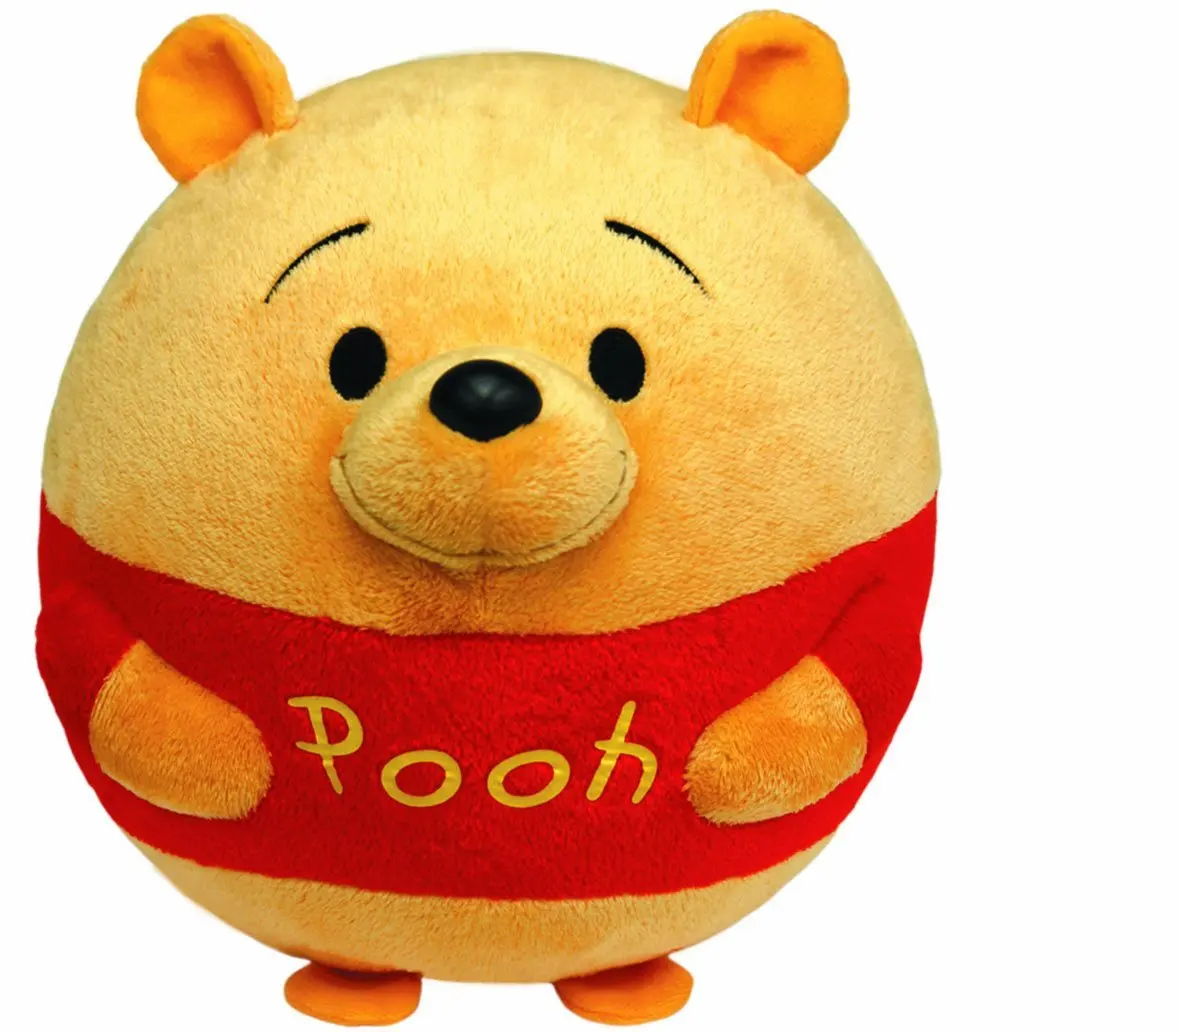 pooh teddy bear price